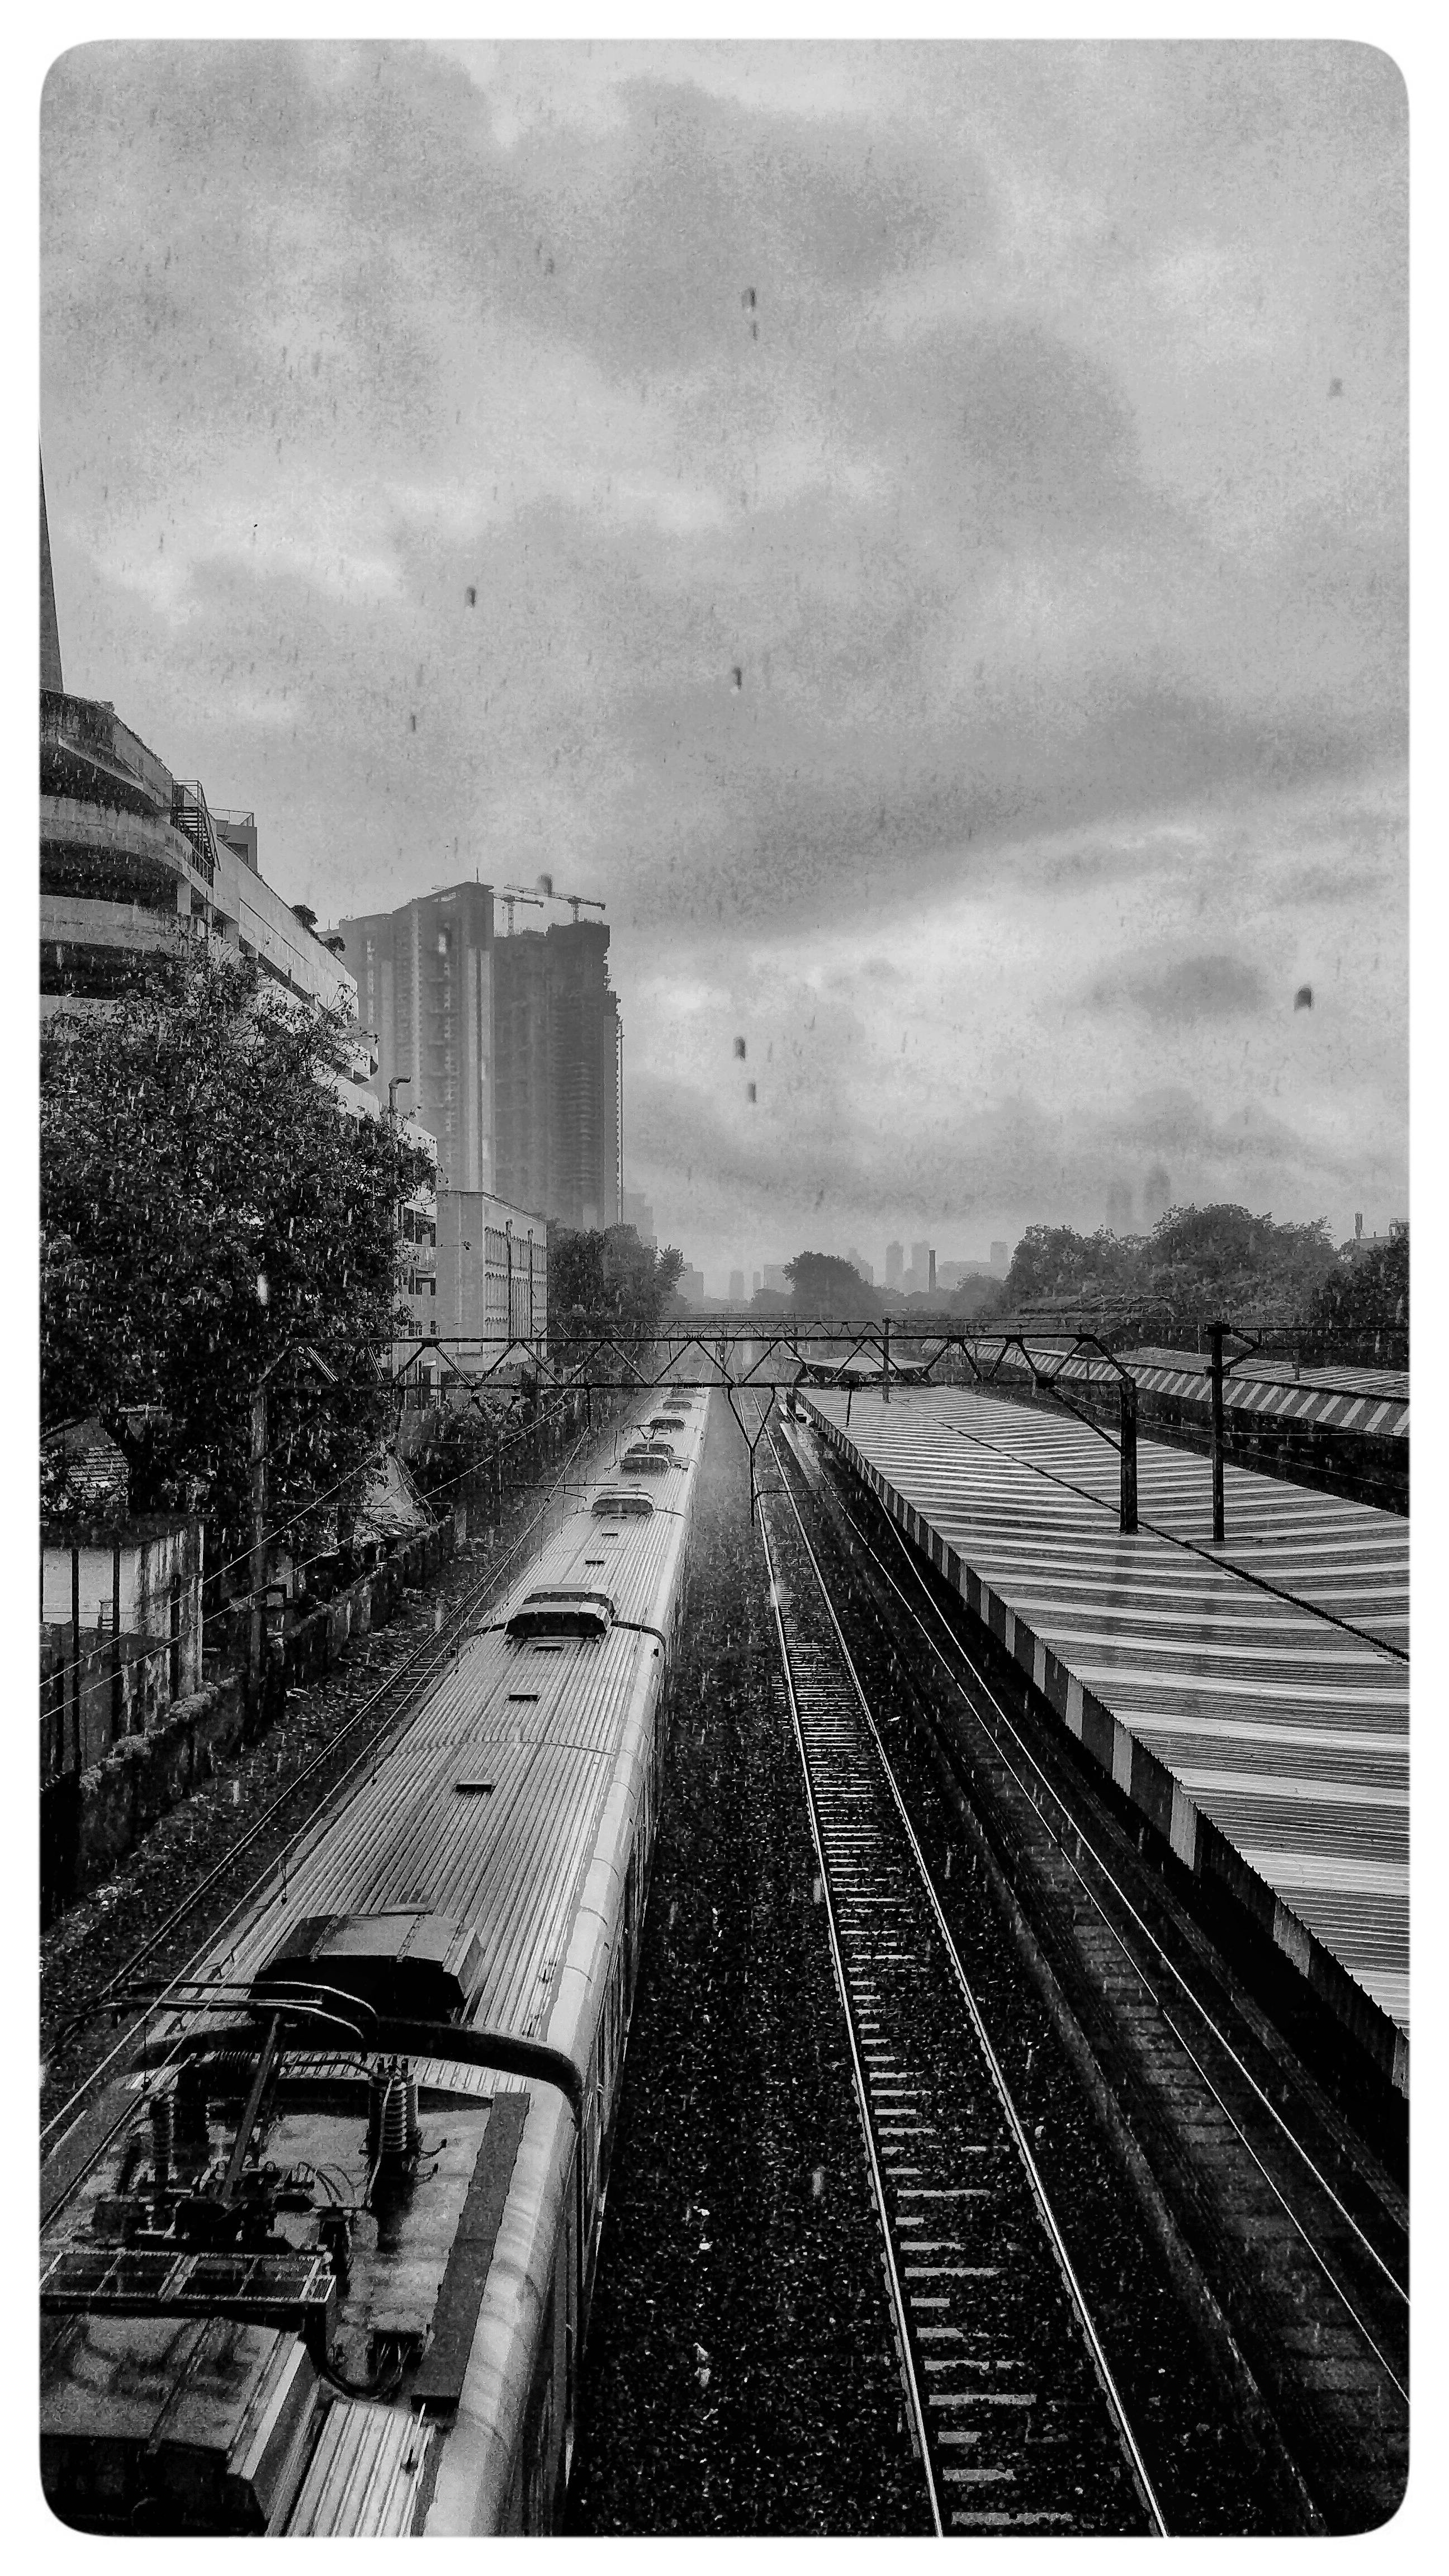 Free stock photo of platform, rain, trains